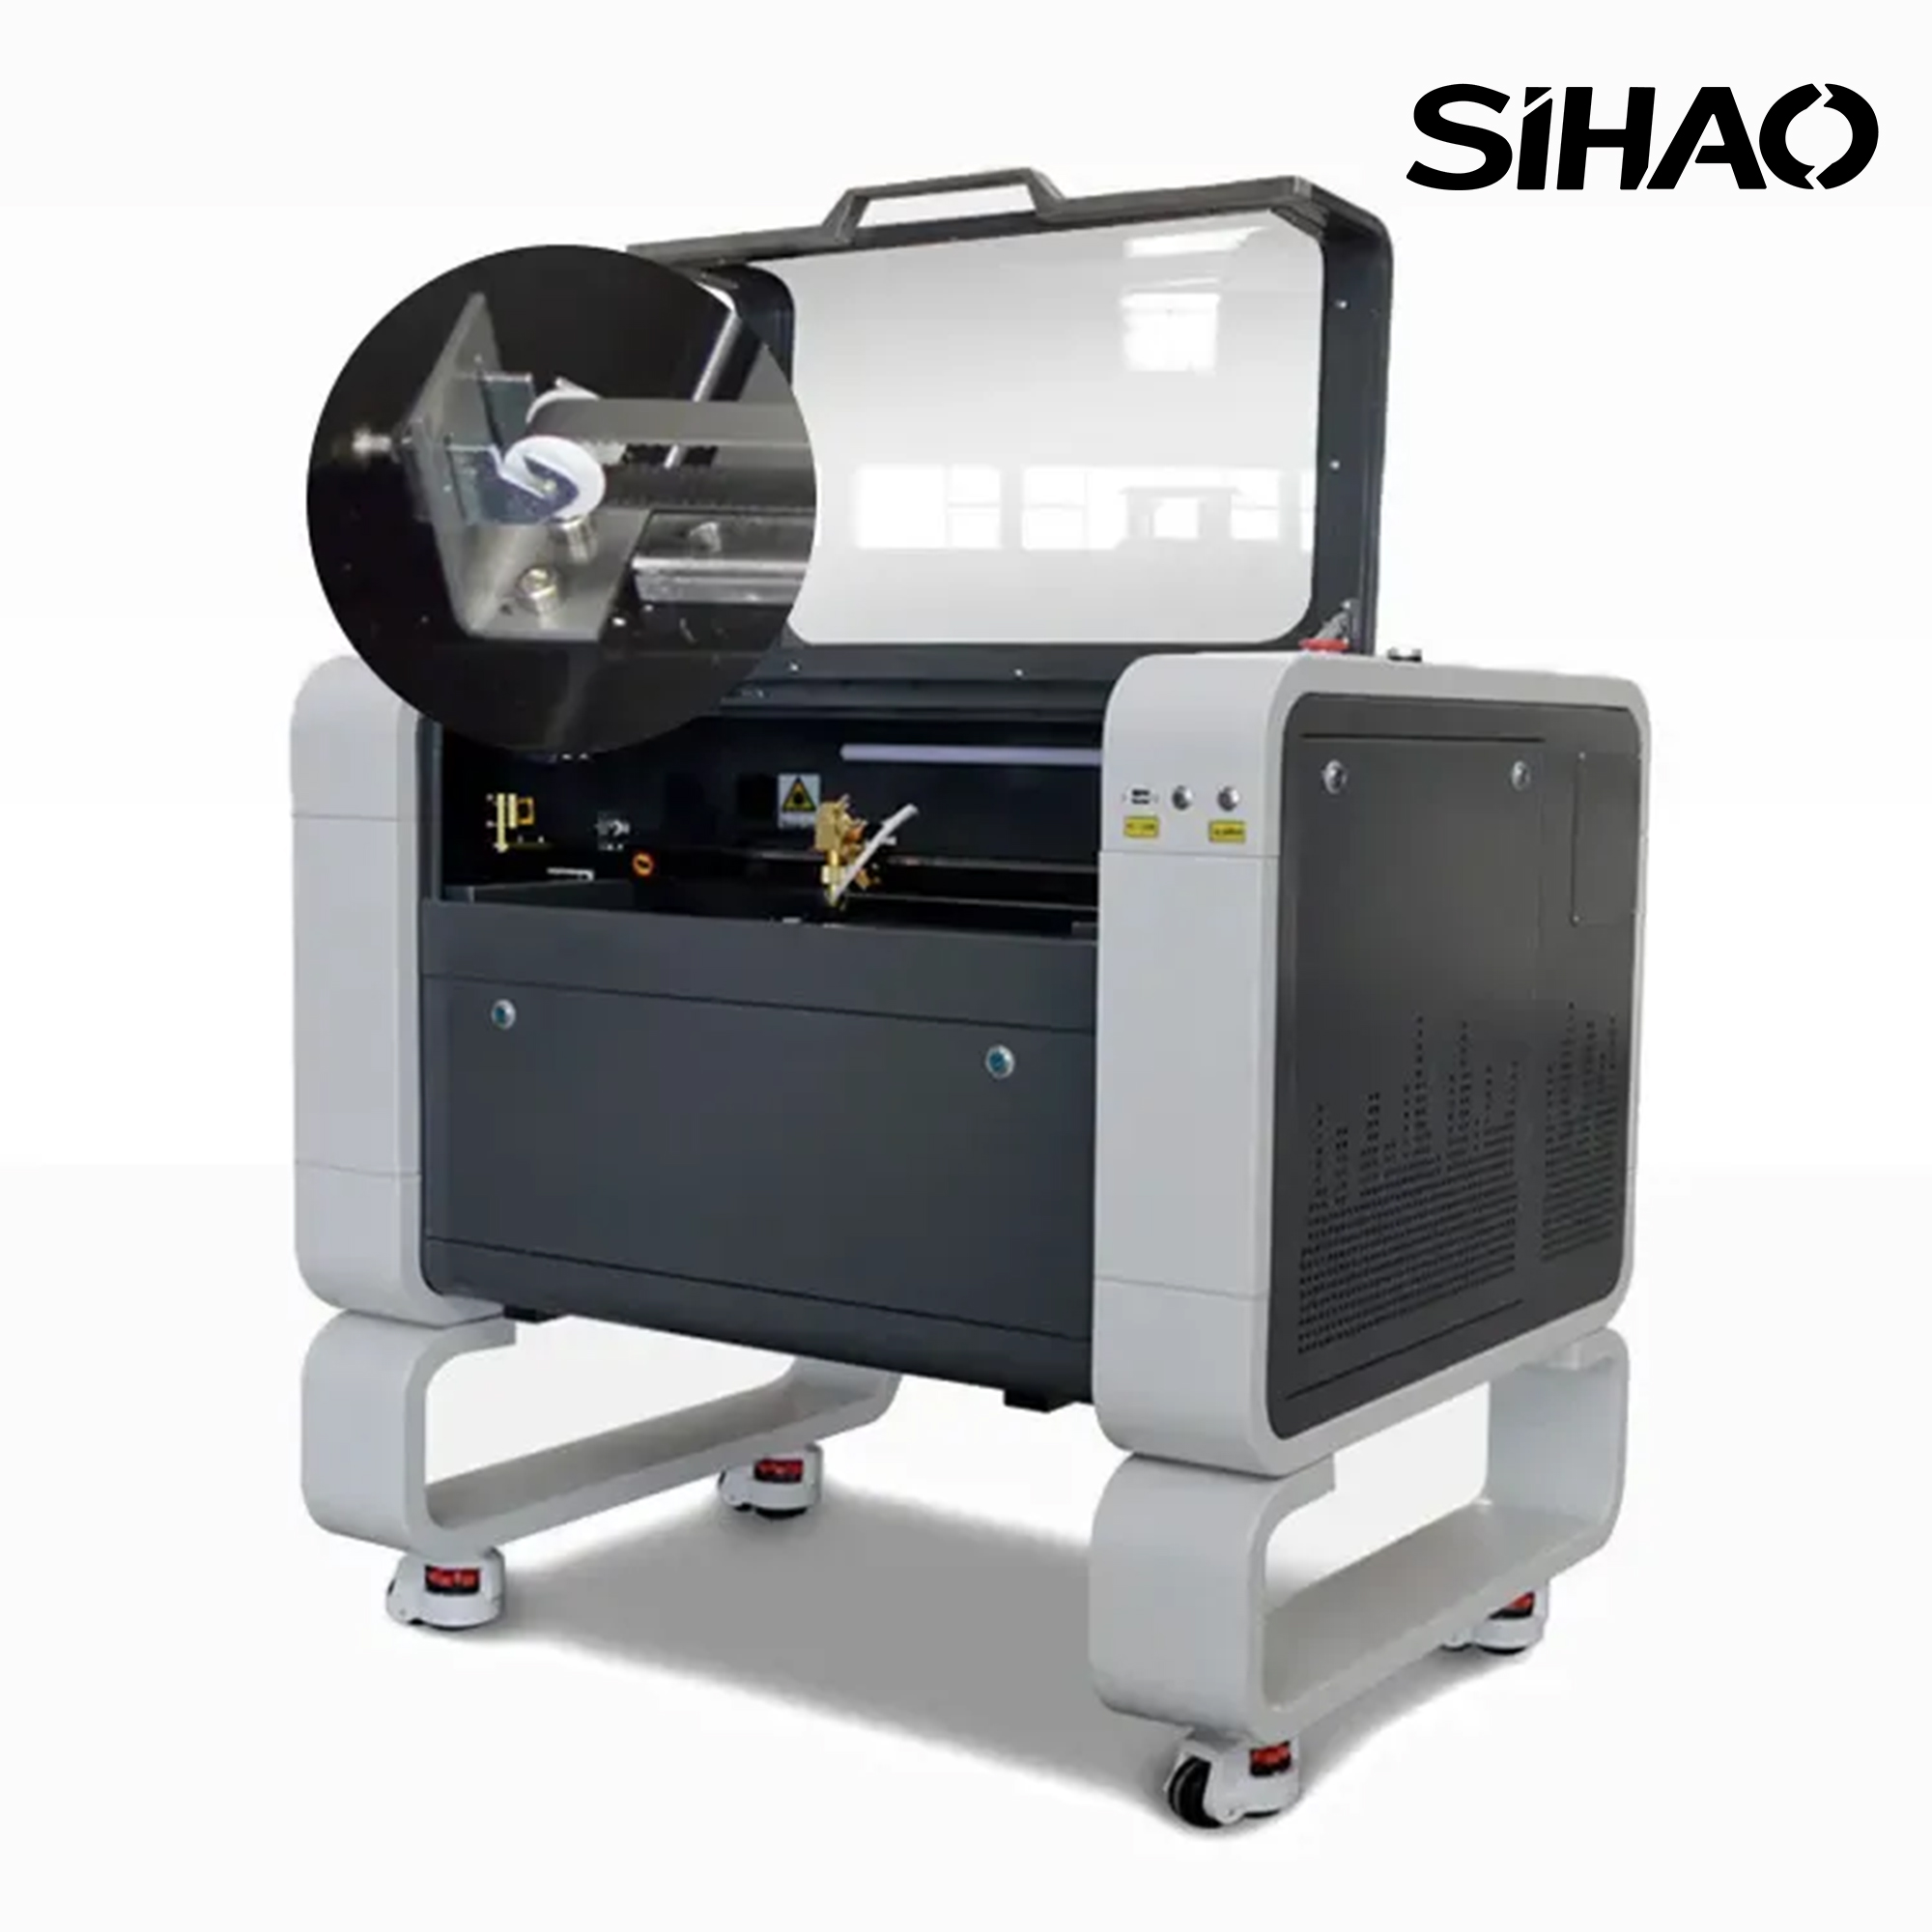 SIHAO 600X400MM 60W Laser Engraving Machine